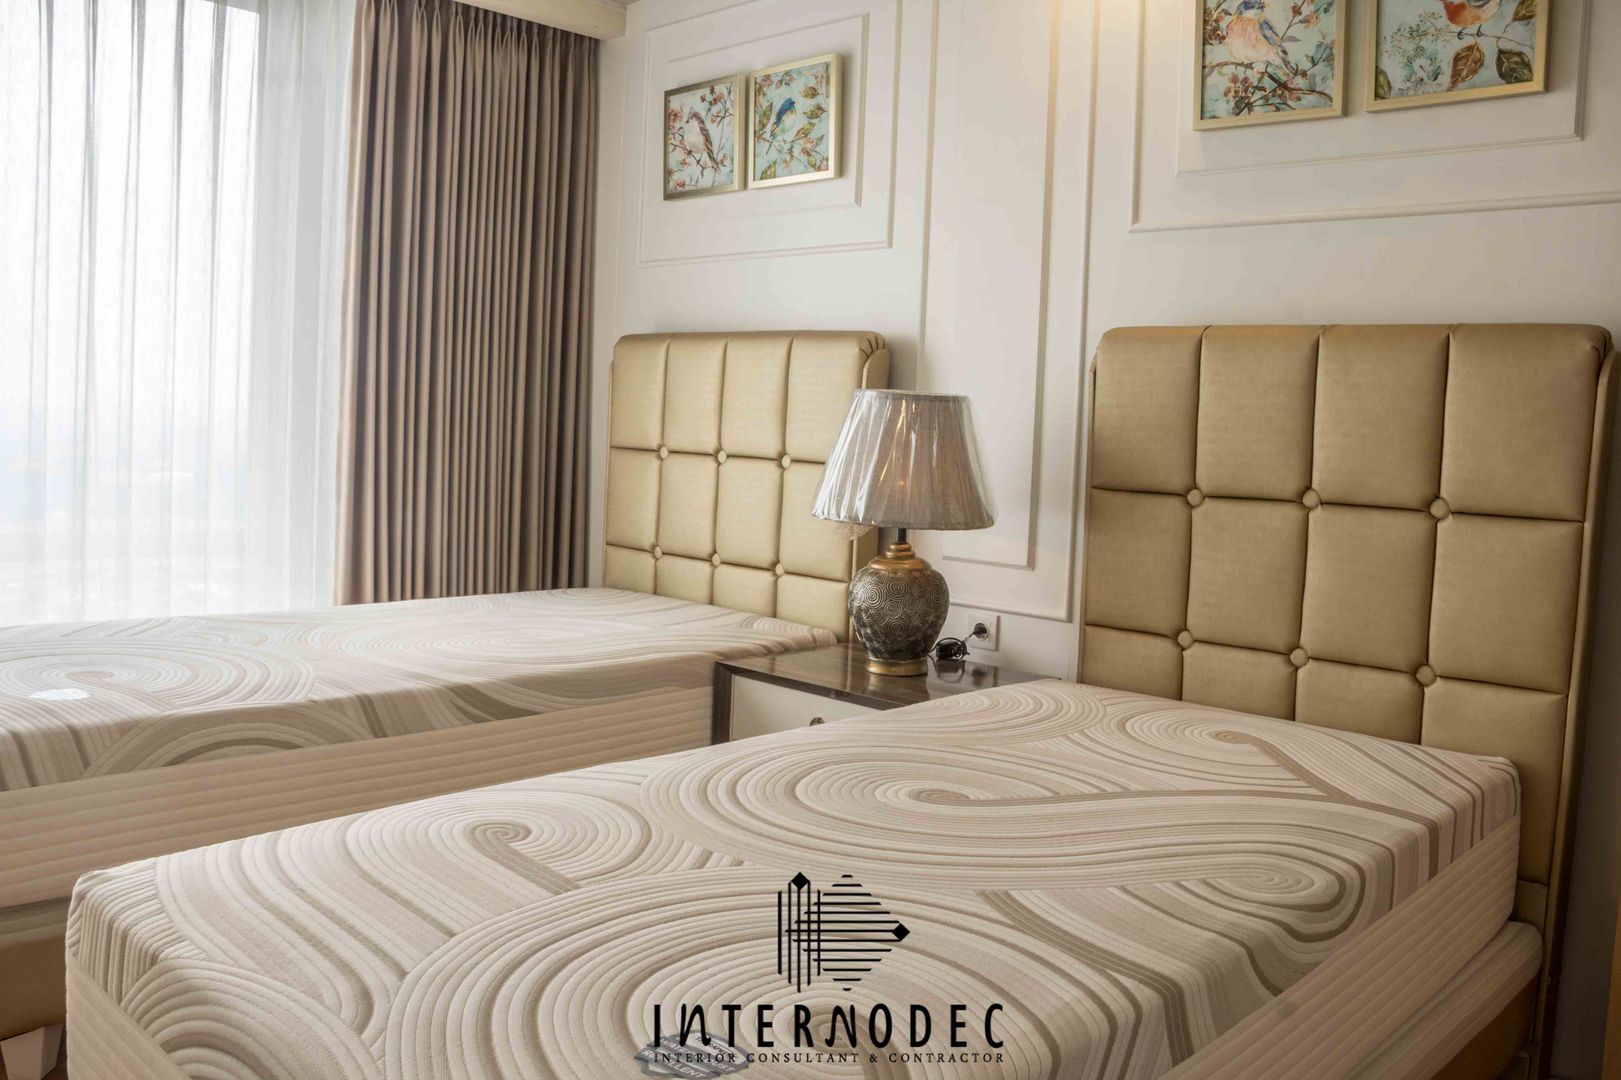 Classic & Luxurious Apartment Mrs. CS, Internodec Internodec Habitaciones de estilo clásico